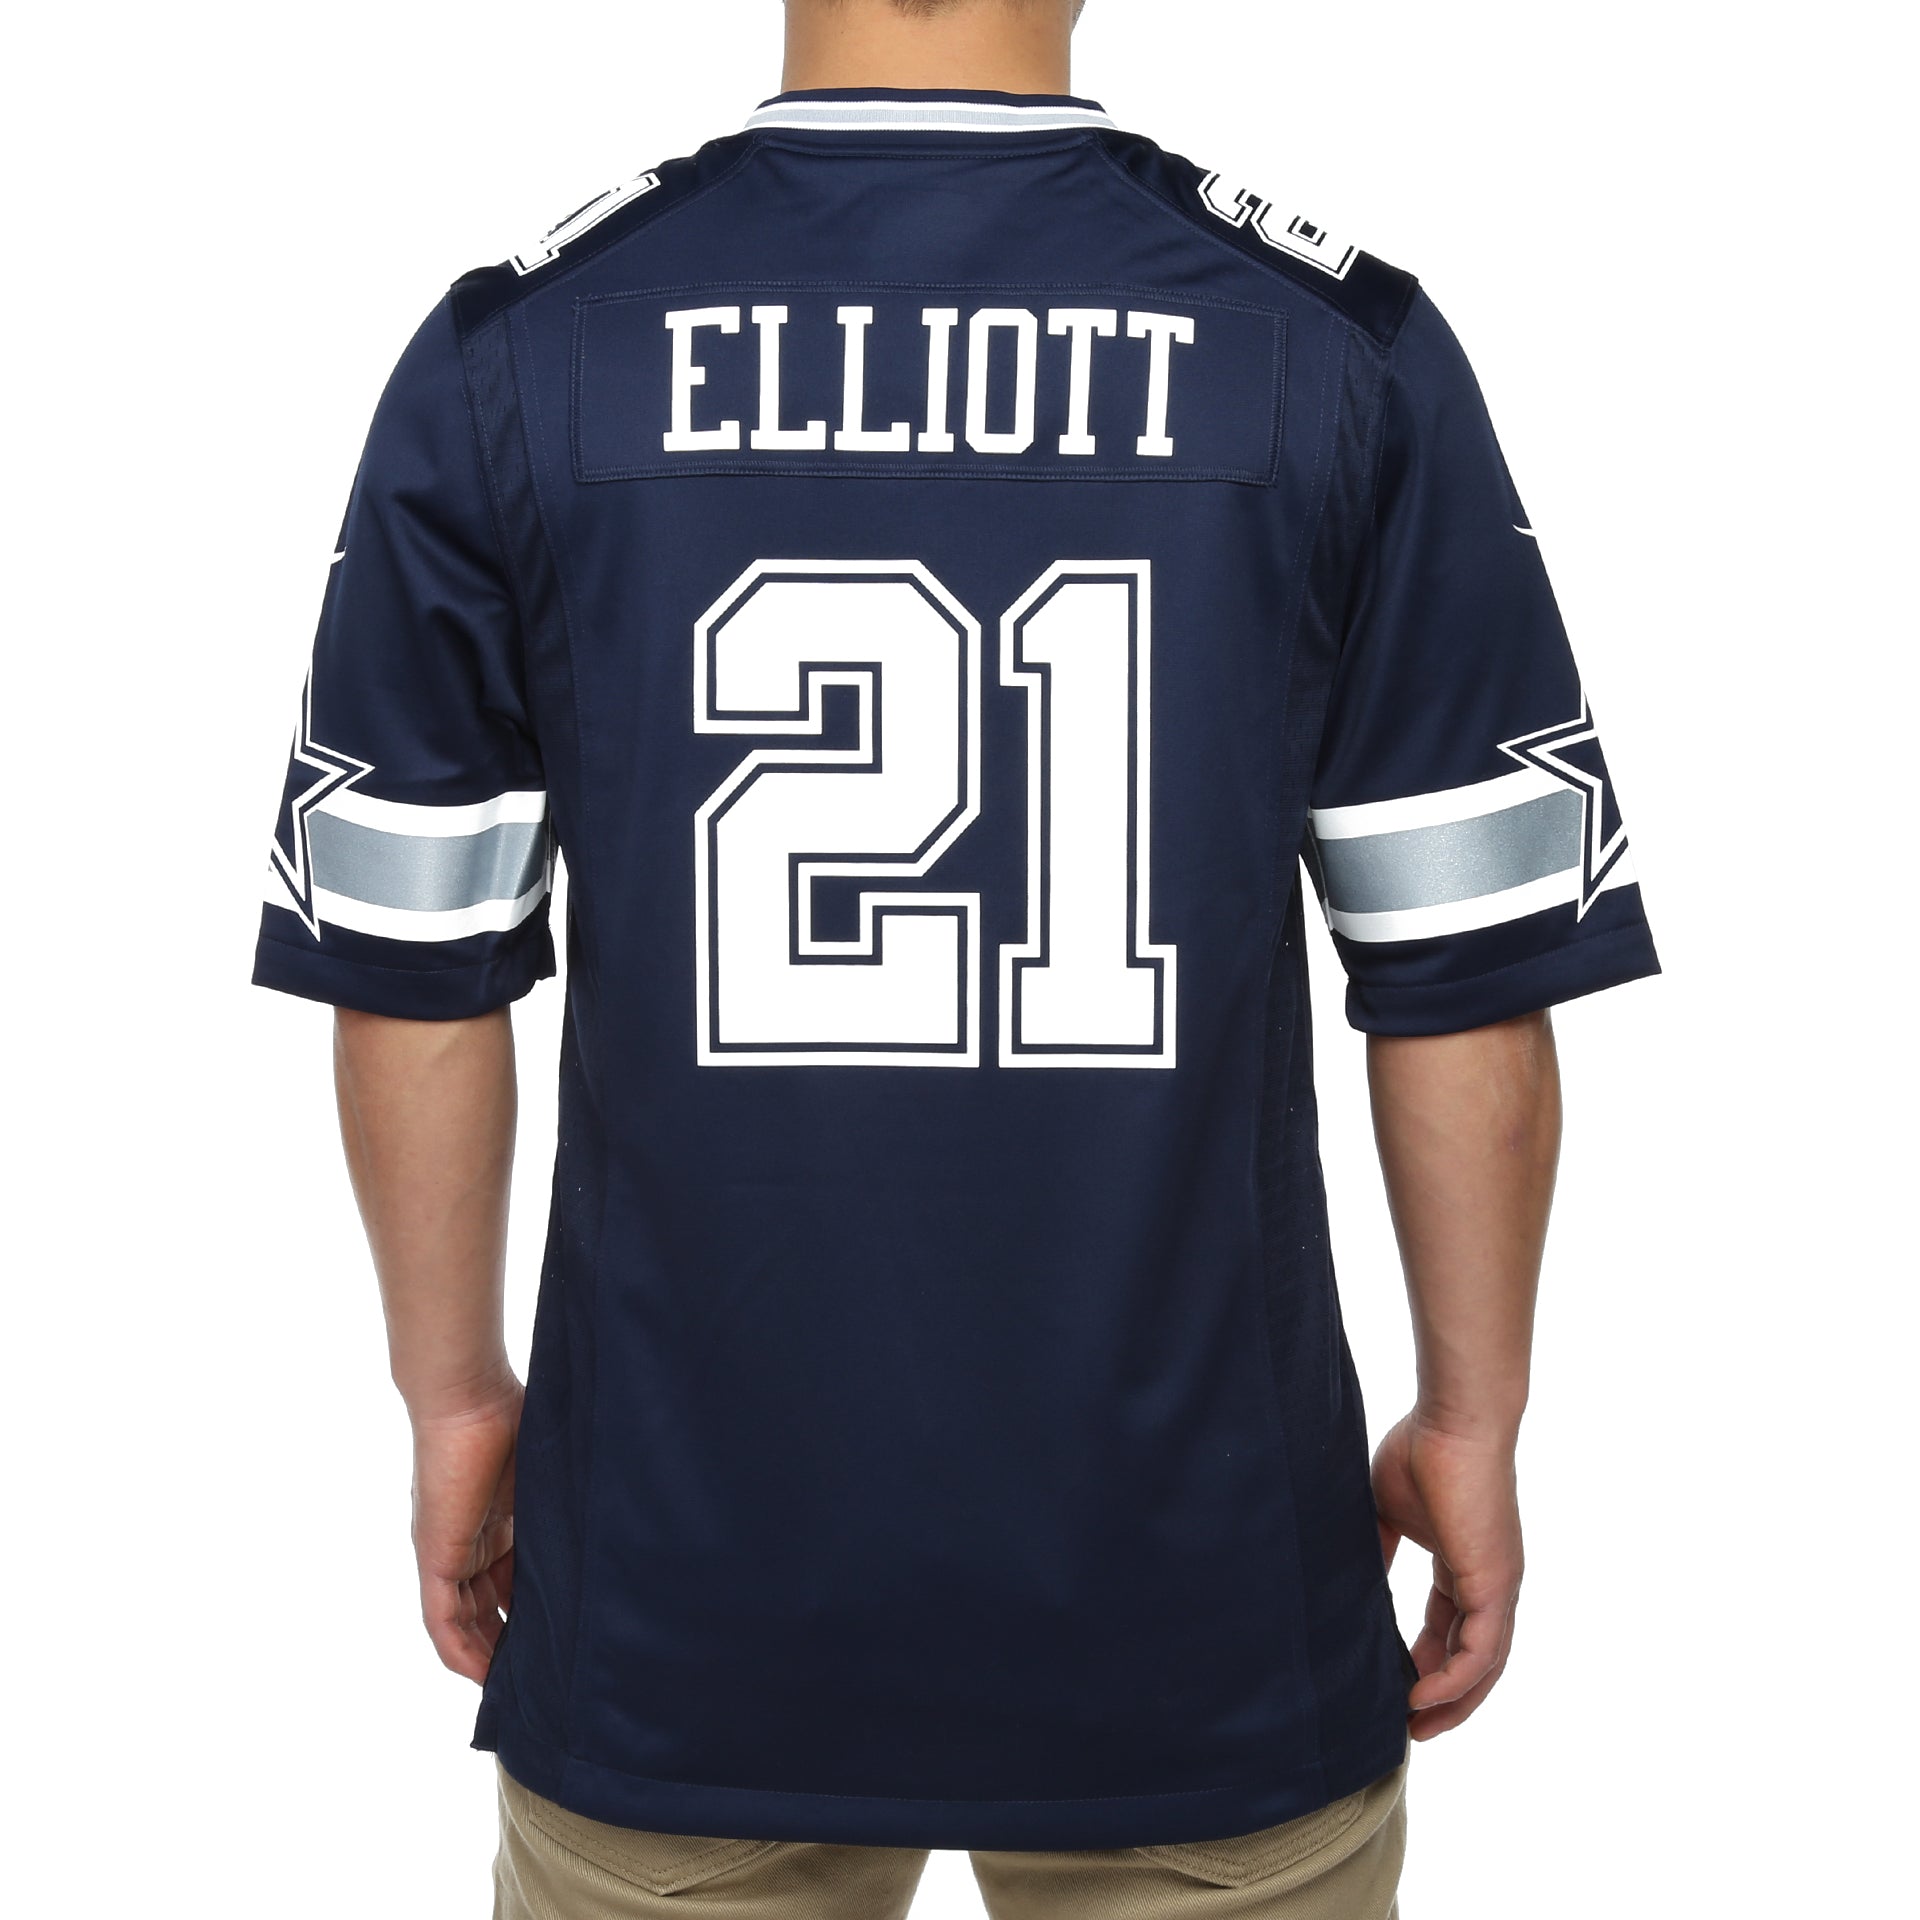 NFL Dallas Cowboys (Ezekiel Elliott) Women's Game Football Jersey.